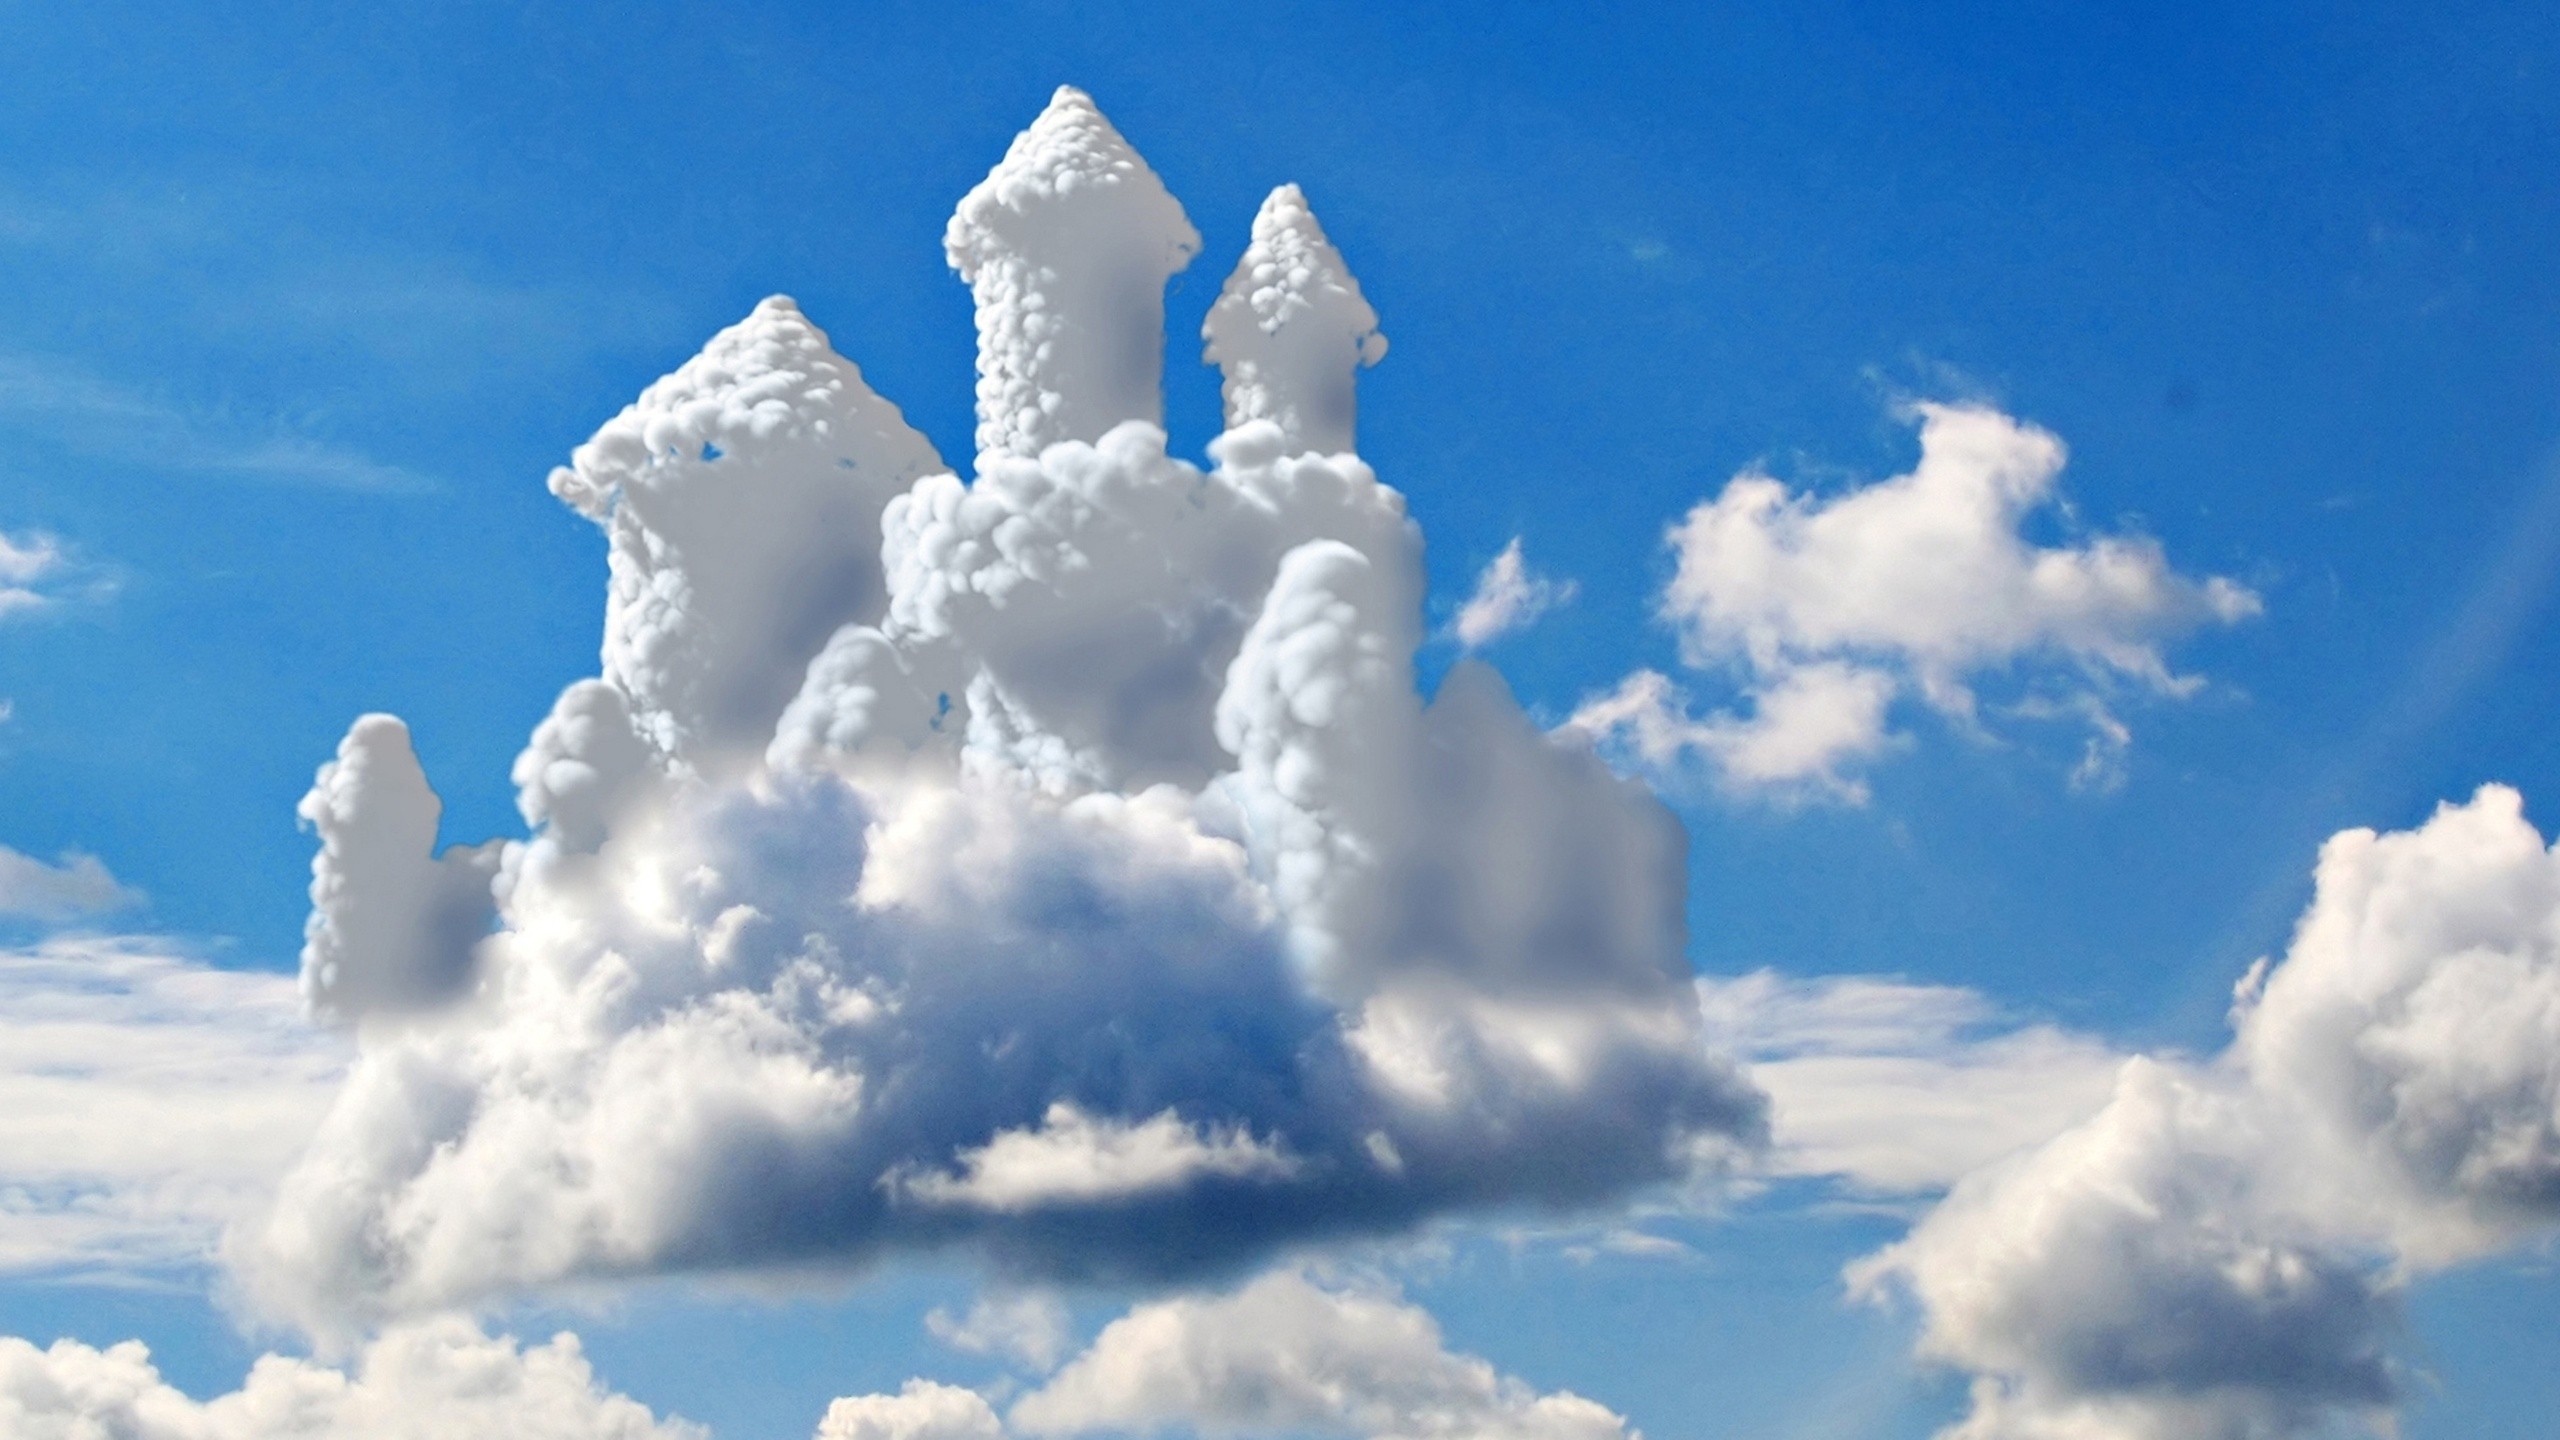 General 2560x1440 clouds sky castle digital art photo manipulation